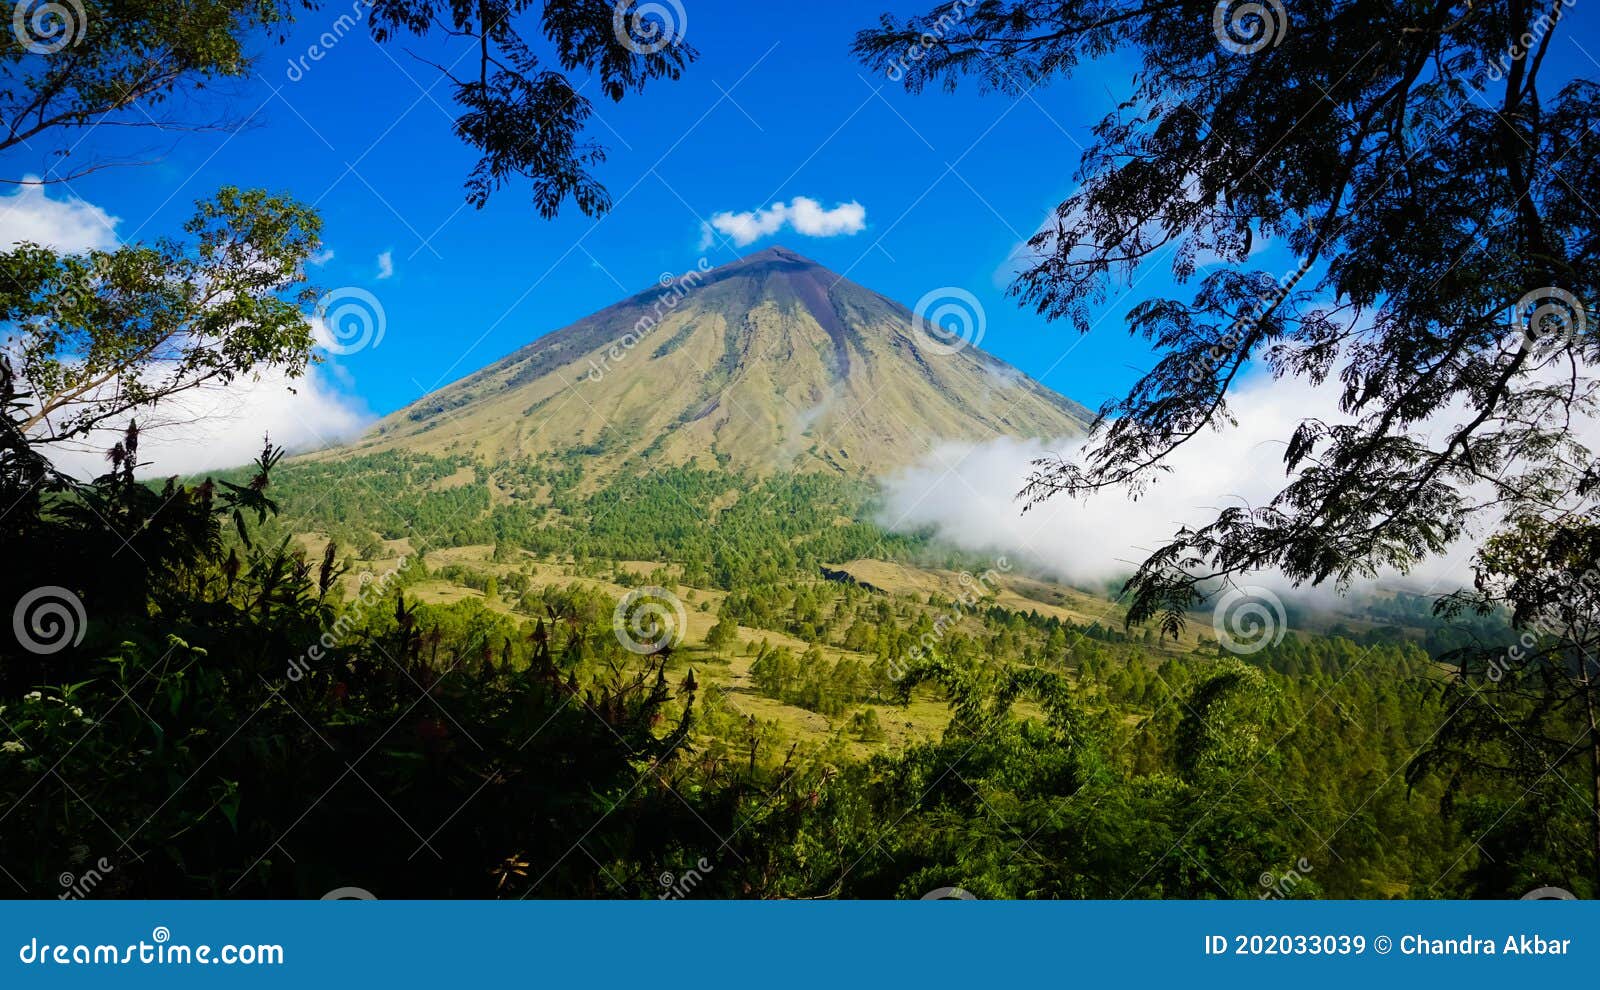 beautiful inierie mountain ntt indonesia